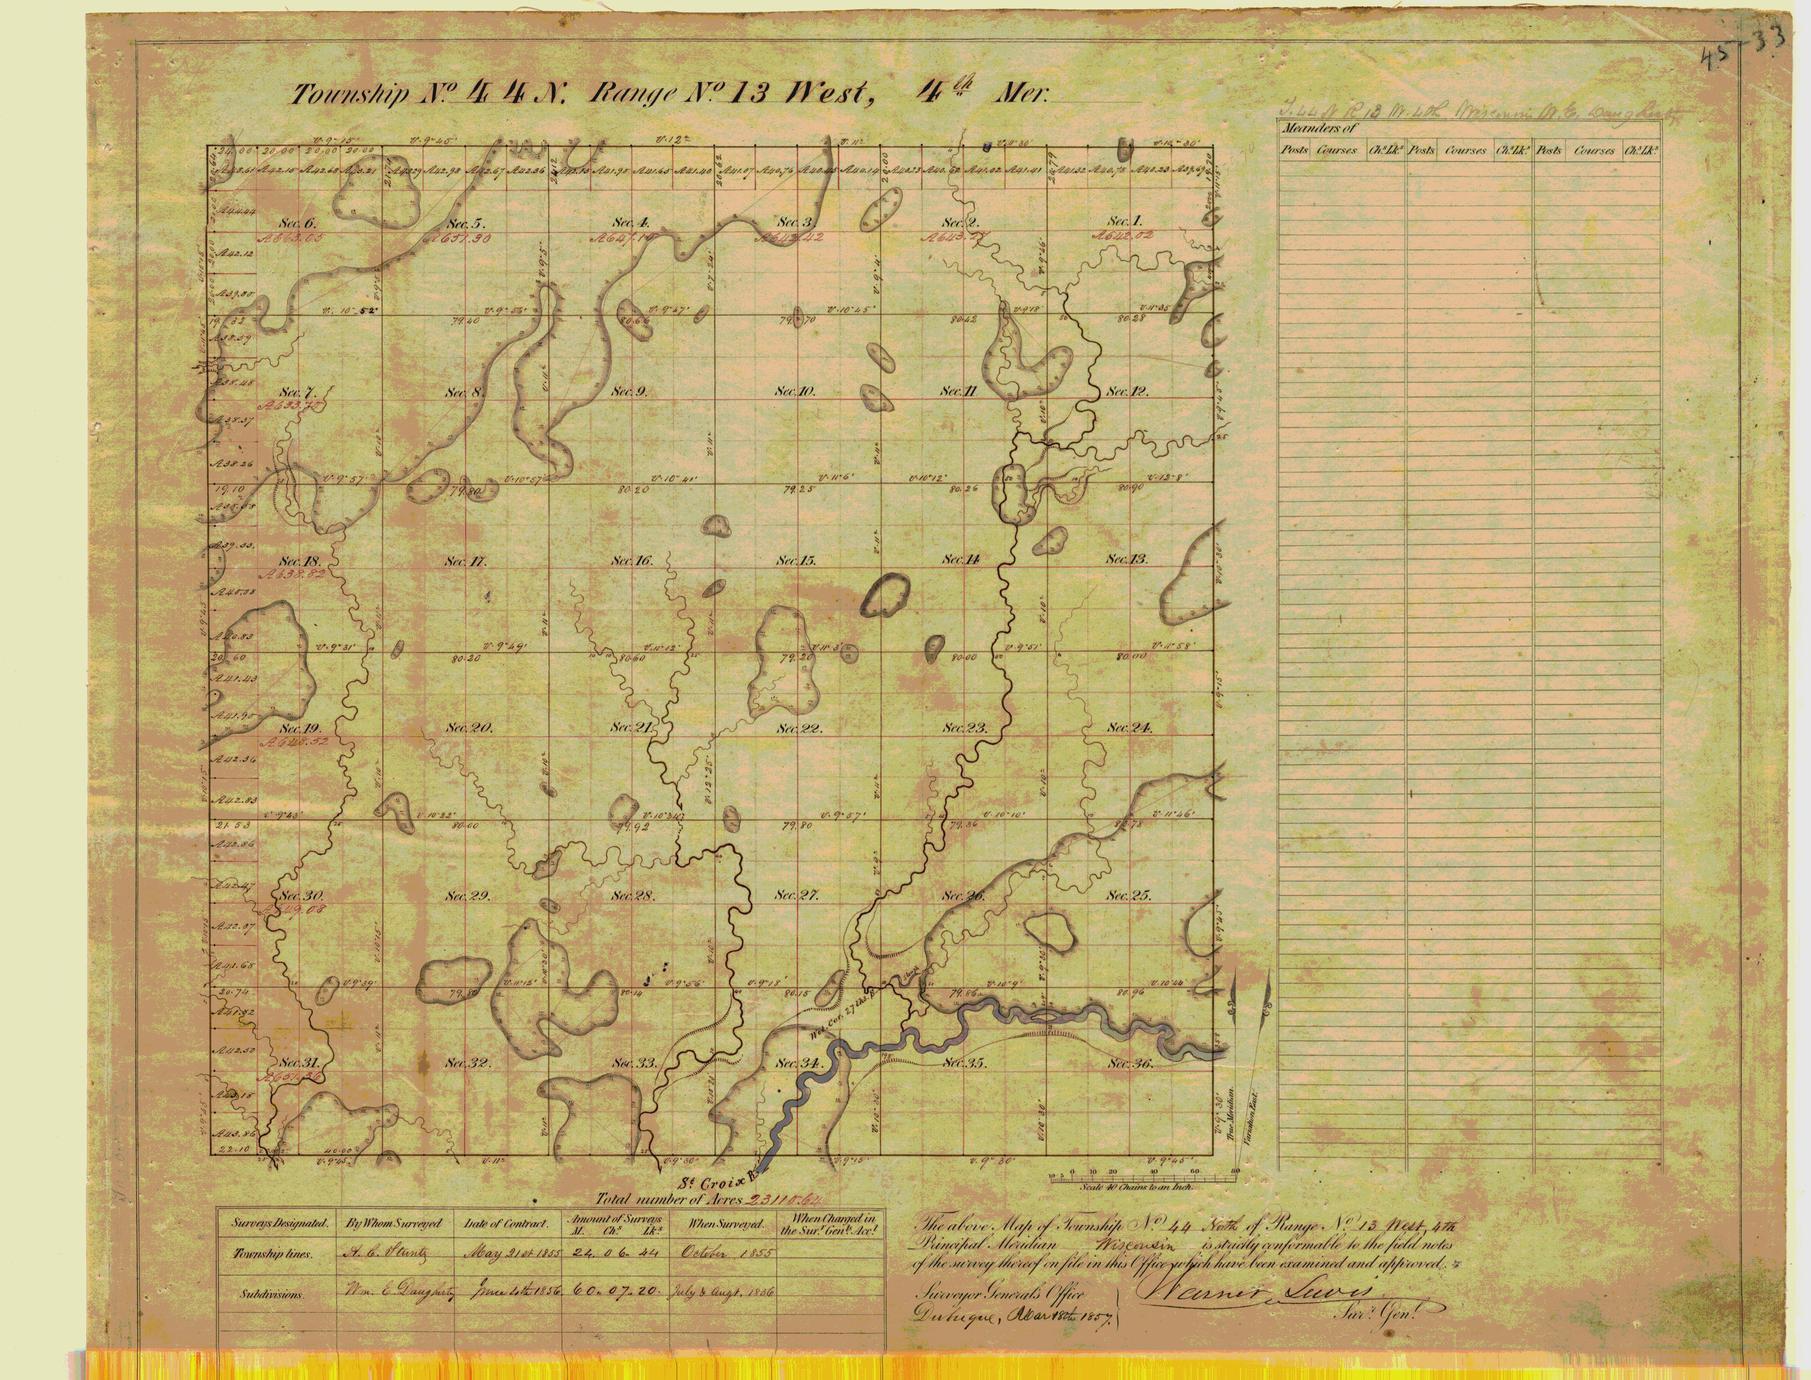 [Public Land Survey System map: Wisconsin Township 44 North, Range 13 West]